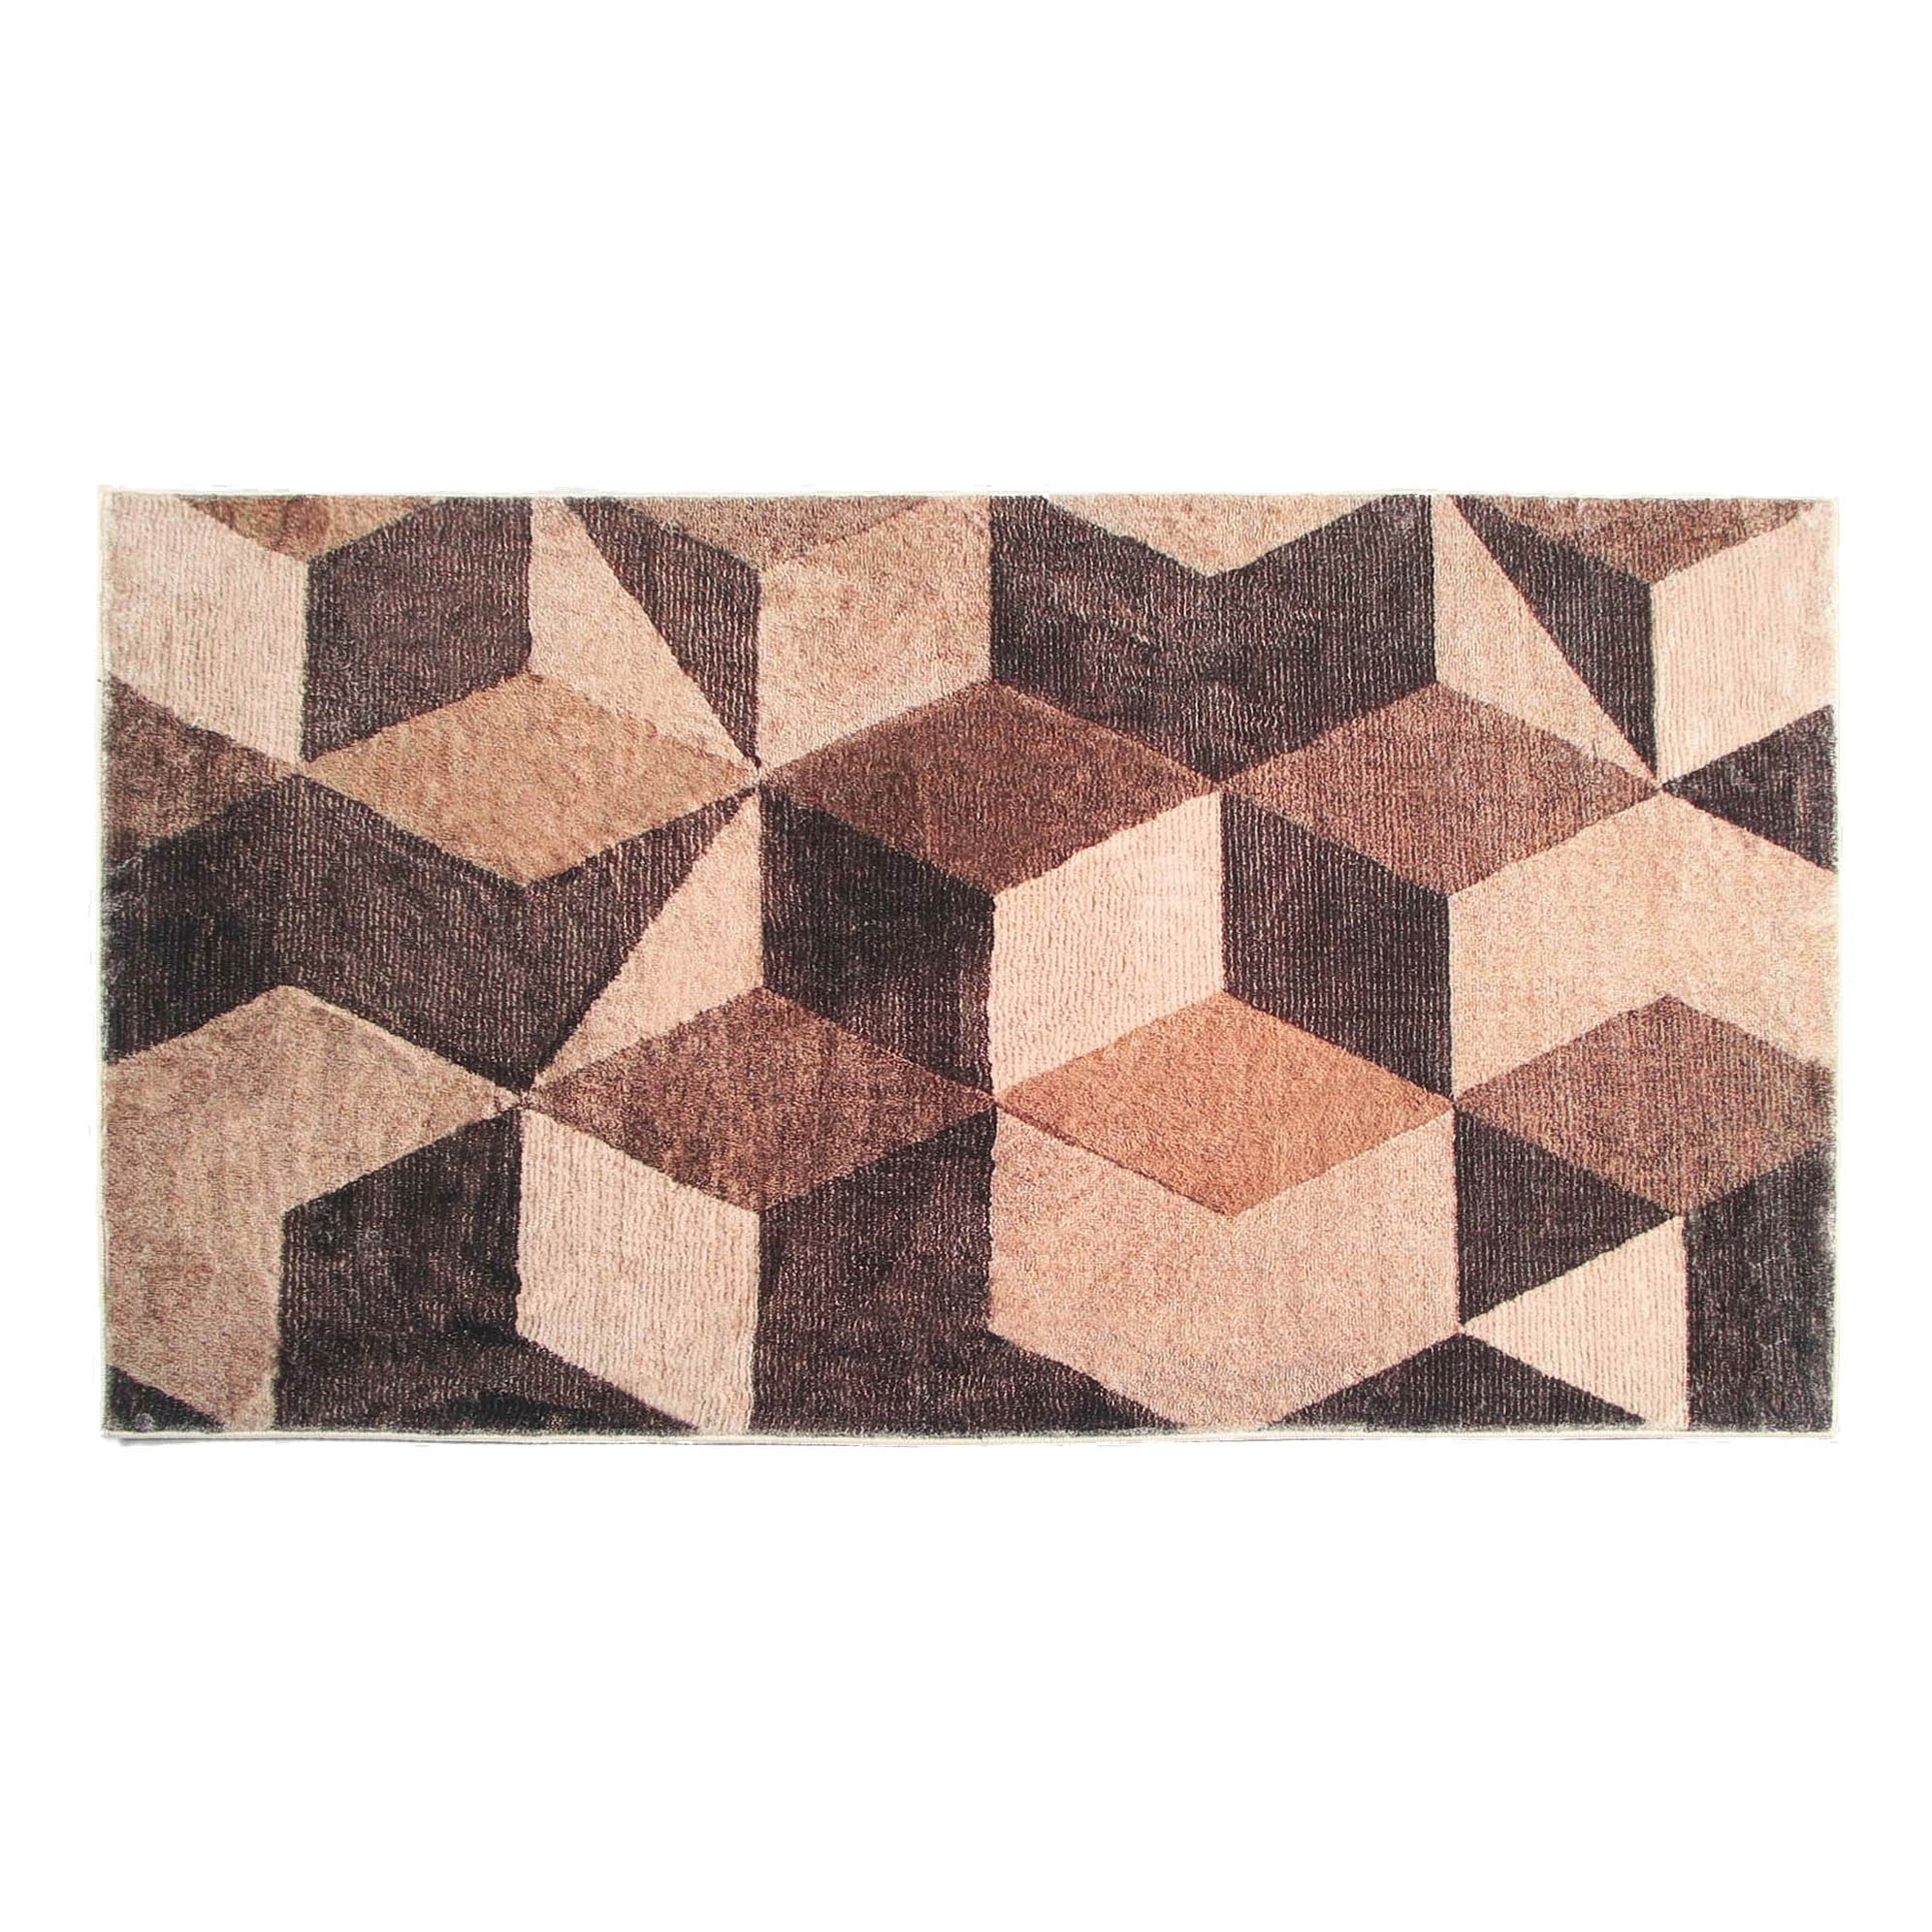 Коврик Silverstone Carpet 80 х 150 см полиэстер коричневый